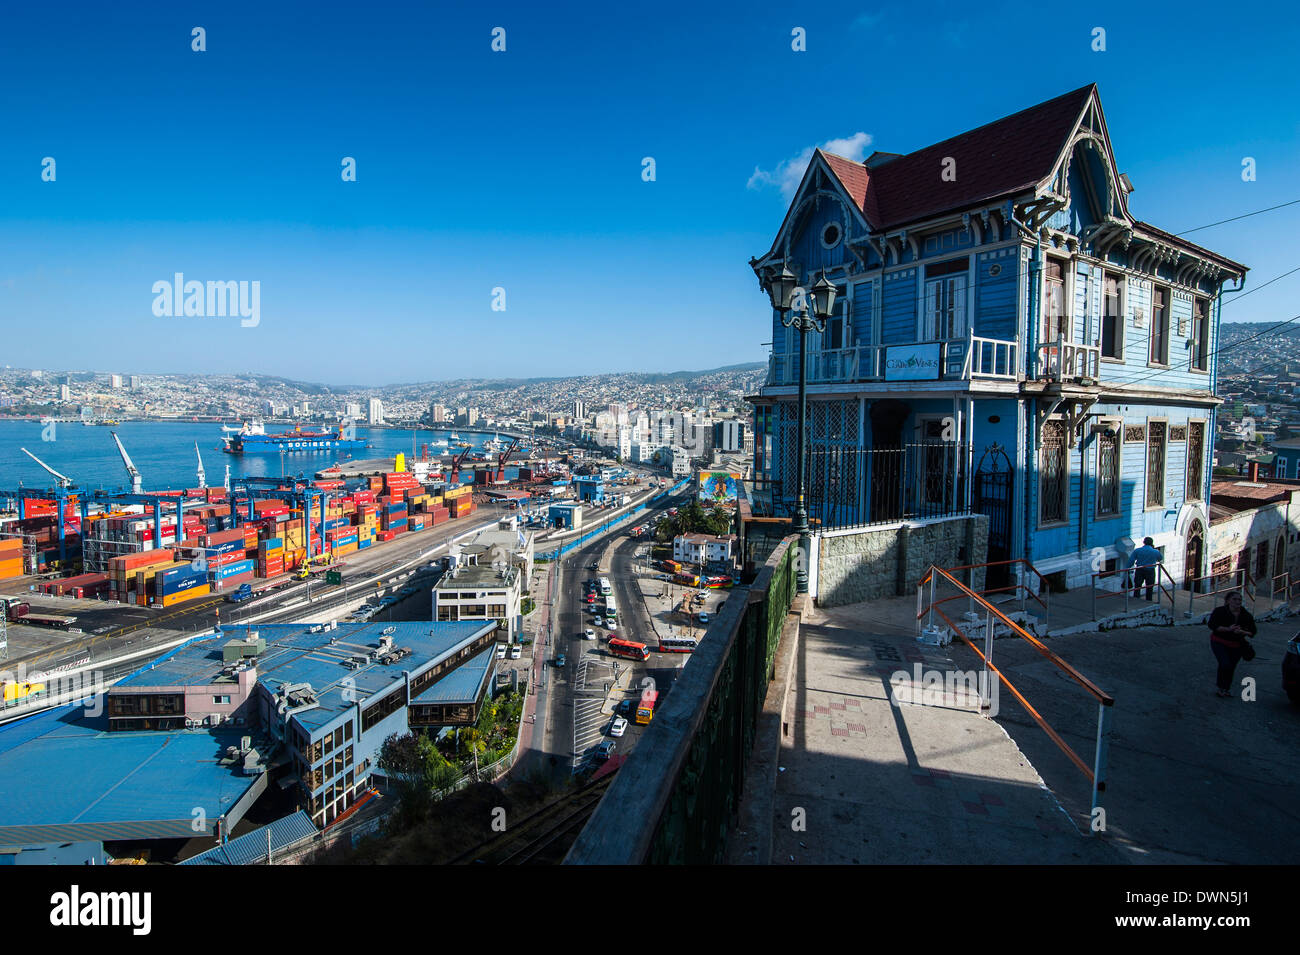 Old wooden villa overlooking the Historic Quarter, UNESCO World Heritage Site, Valparaiso, Chile, South America Stock Photo